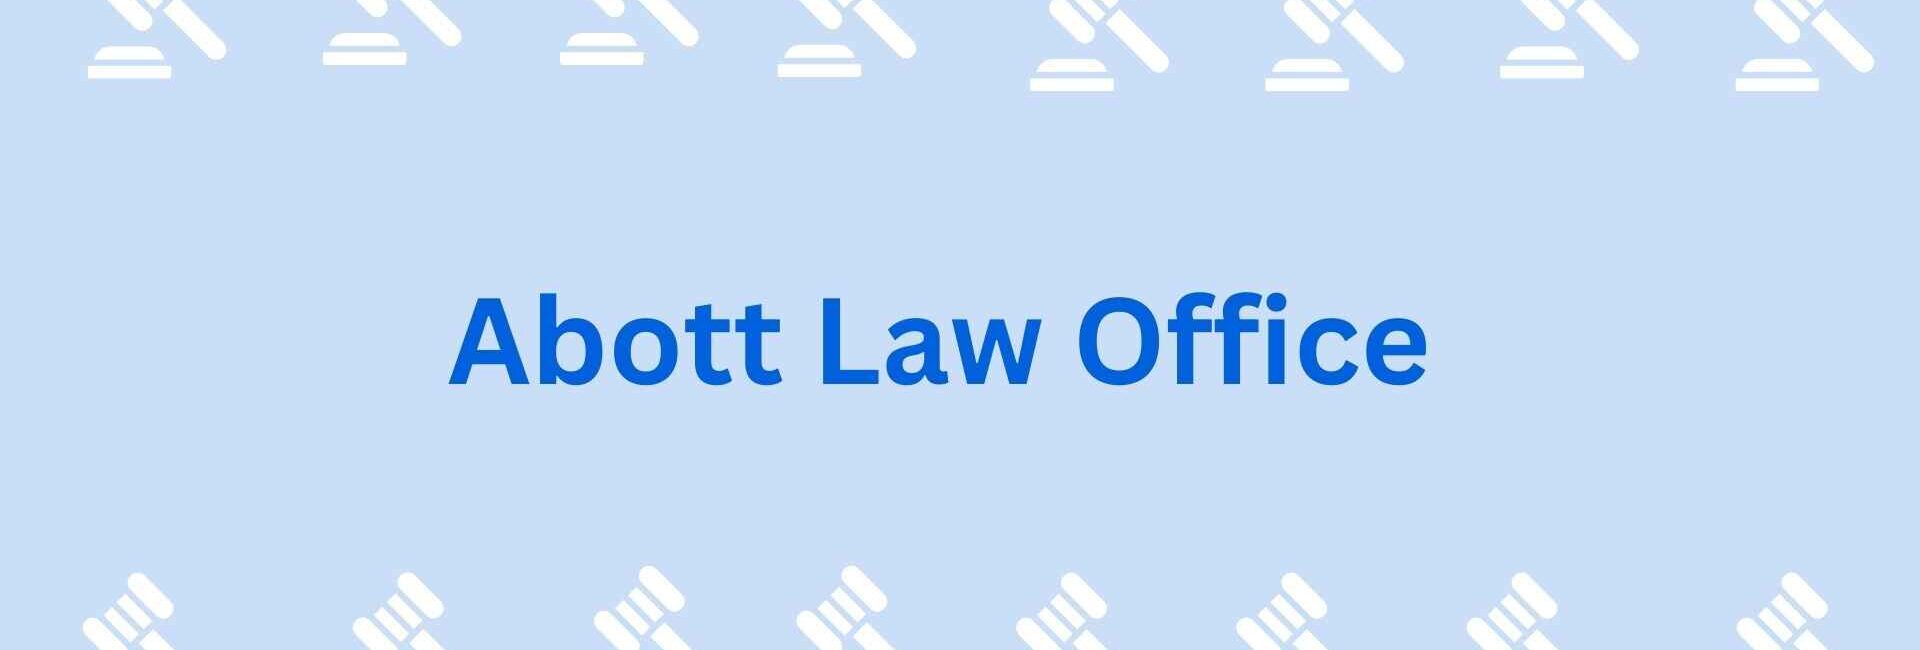 Abott Law Office - legal service provider in Noida